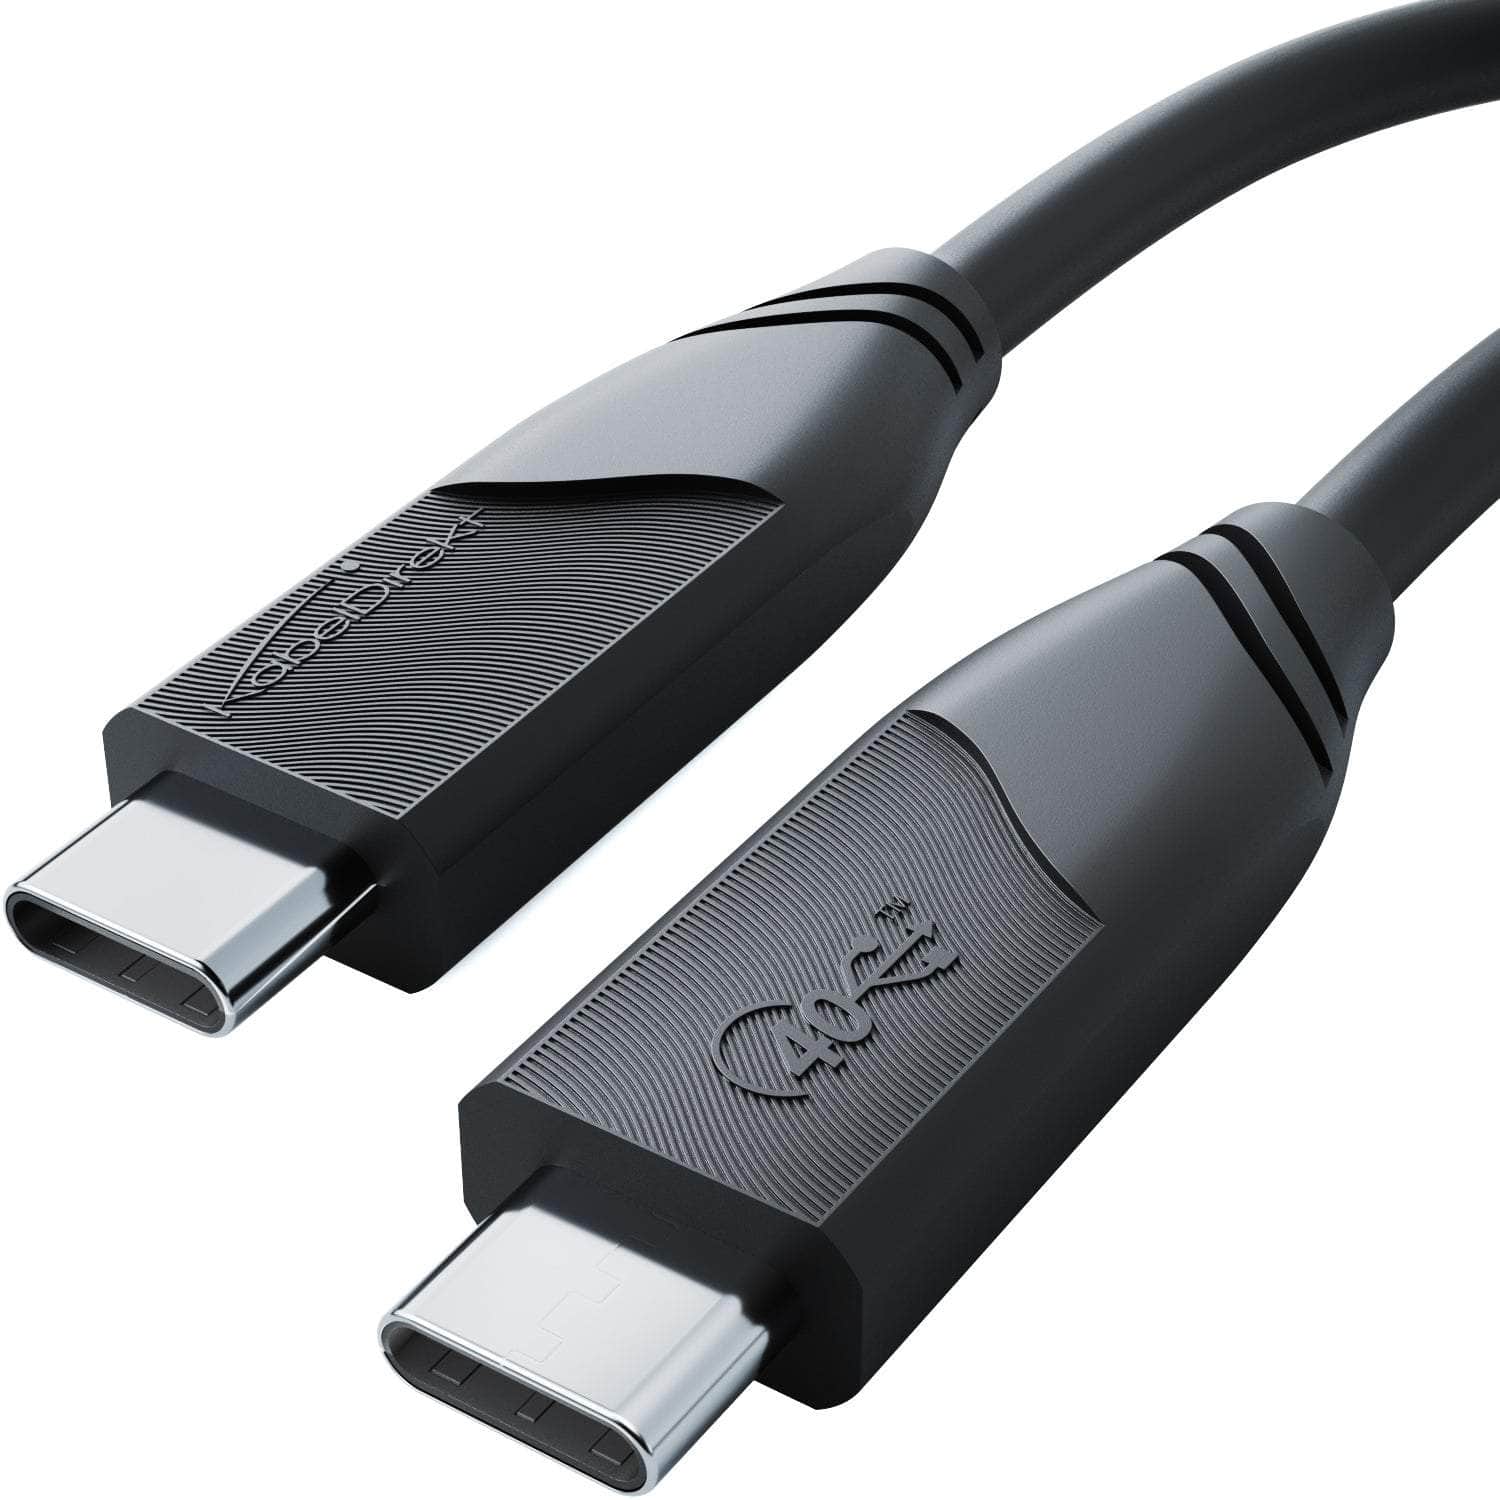 USB C Cable - USB 4.0, Power Delivery 3, 4, black - KabelDirekt